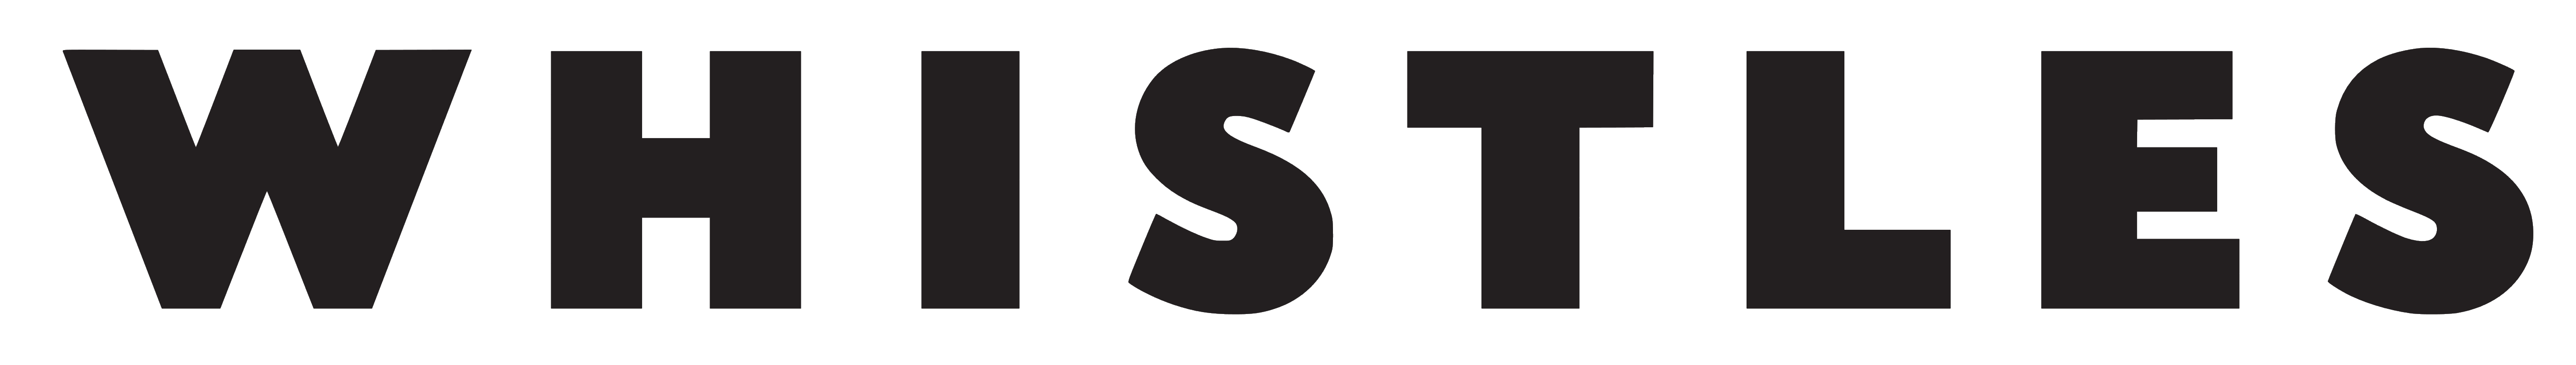 Whistles logo, logotype